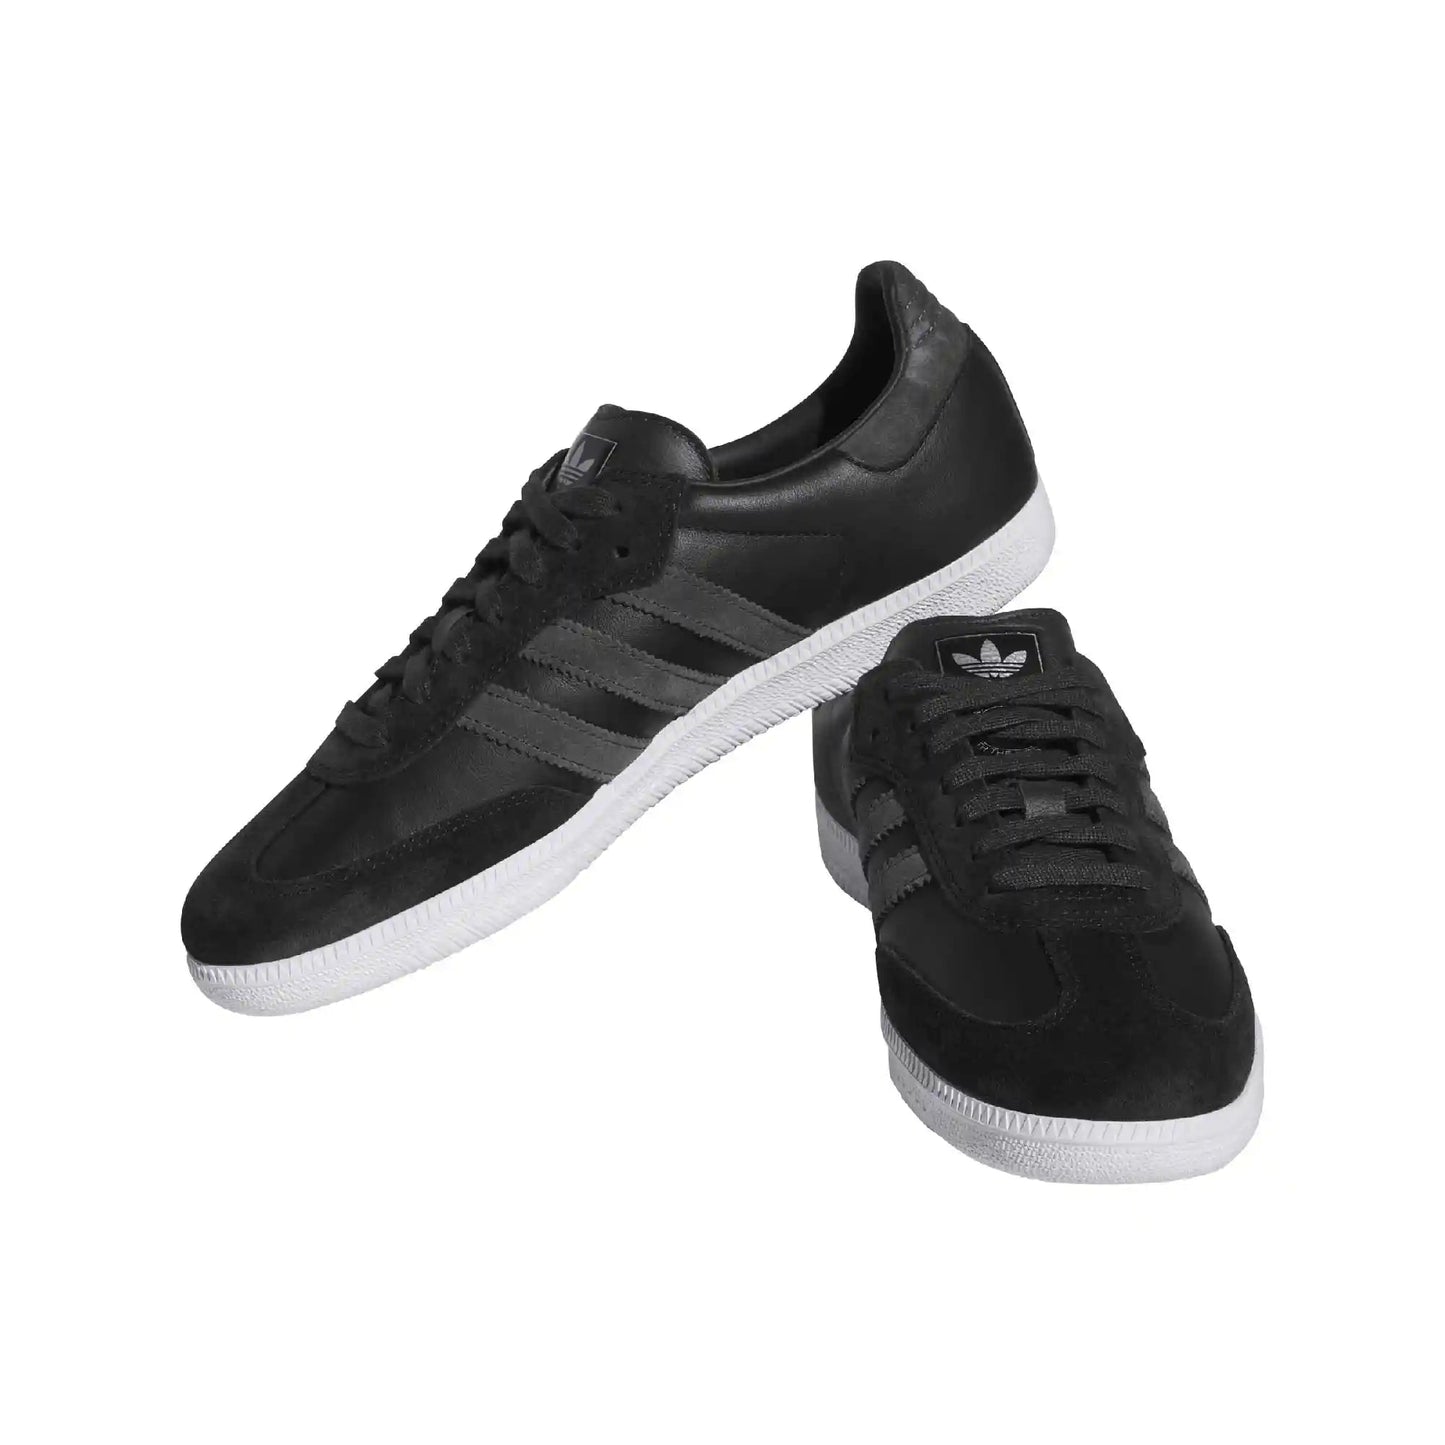 Adidas Samba Adv, core black/carbon/silver metallic - Tiki Room Skateboards - 2